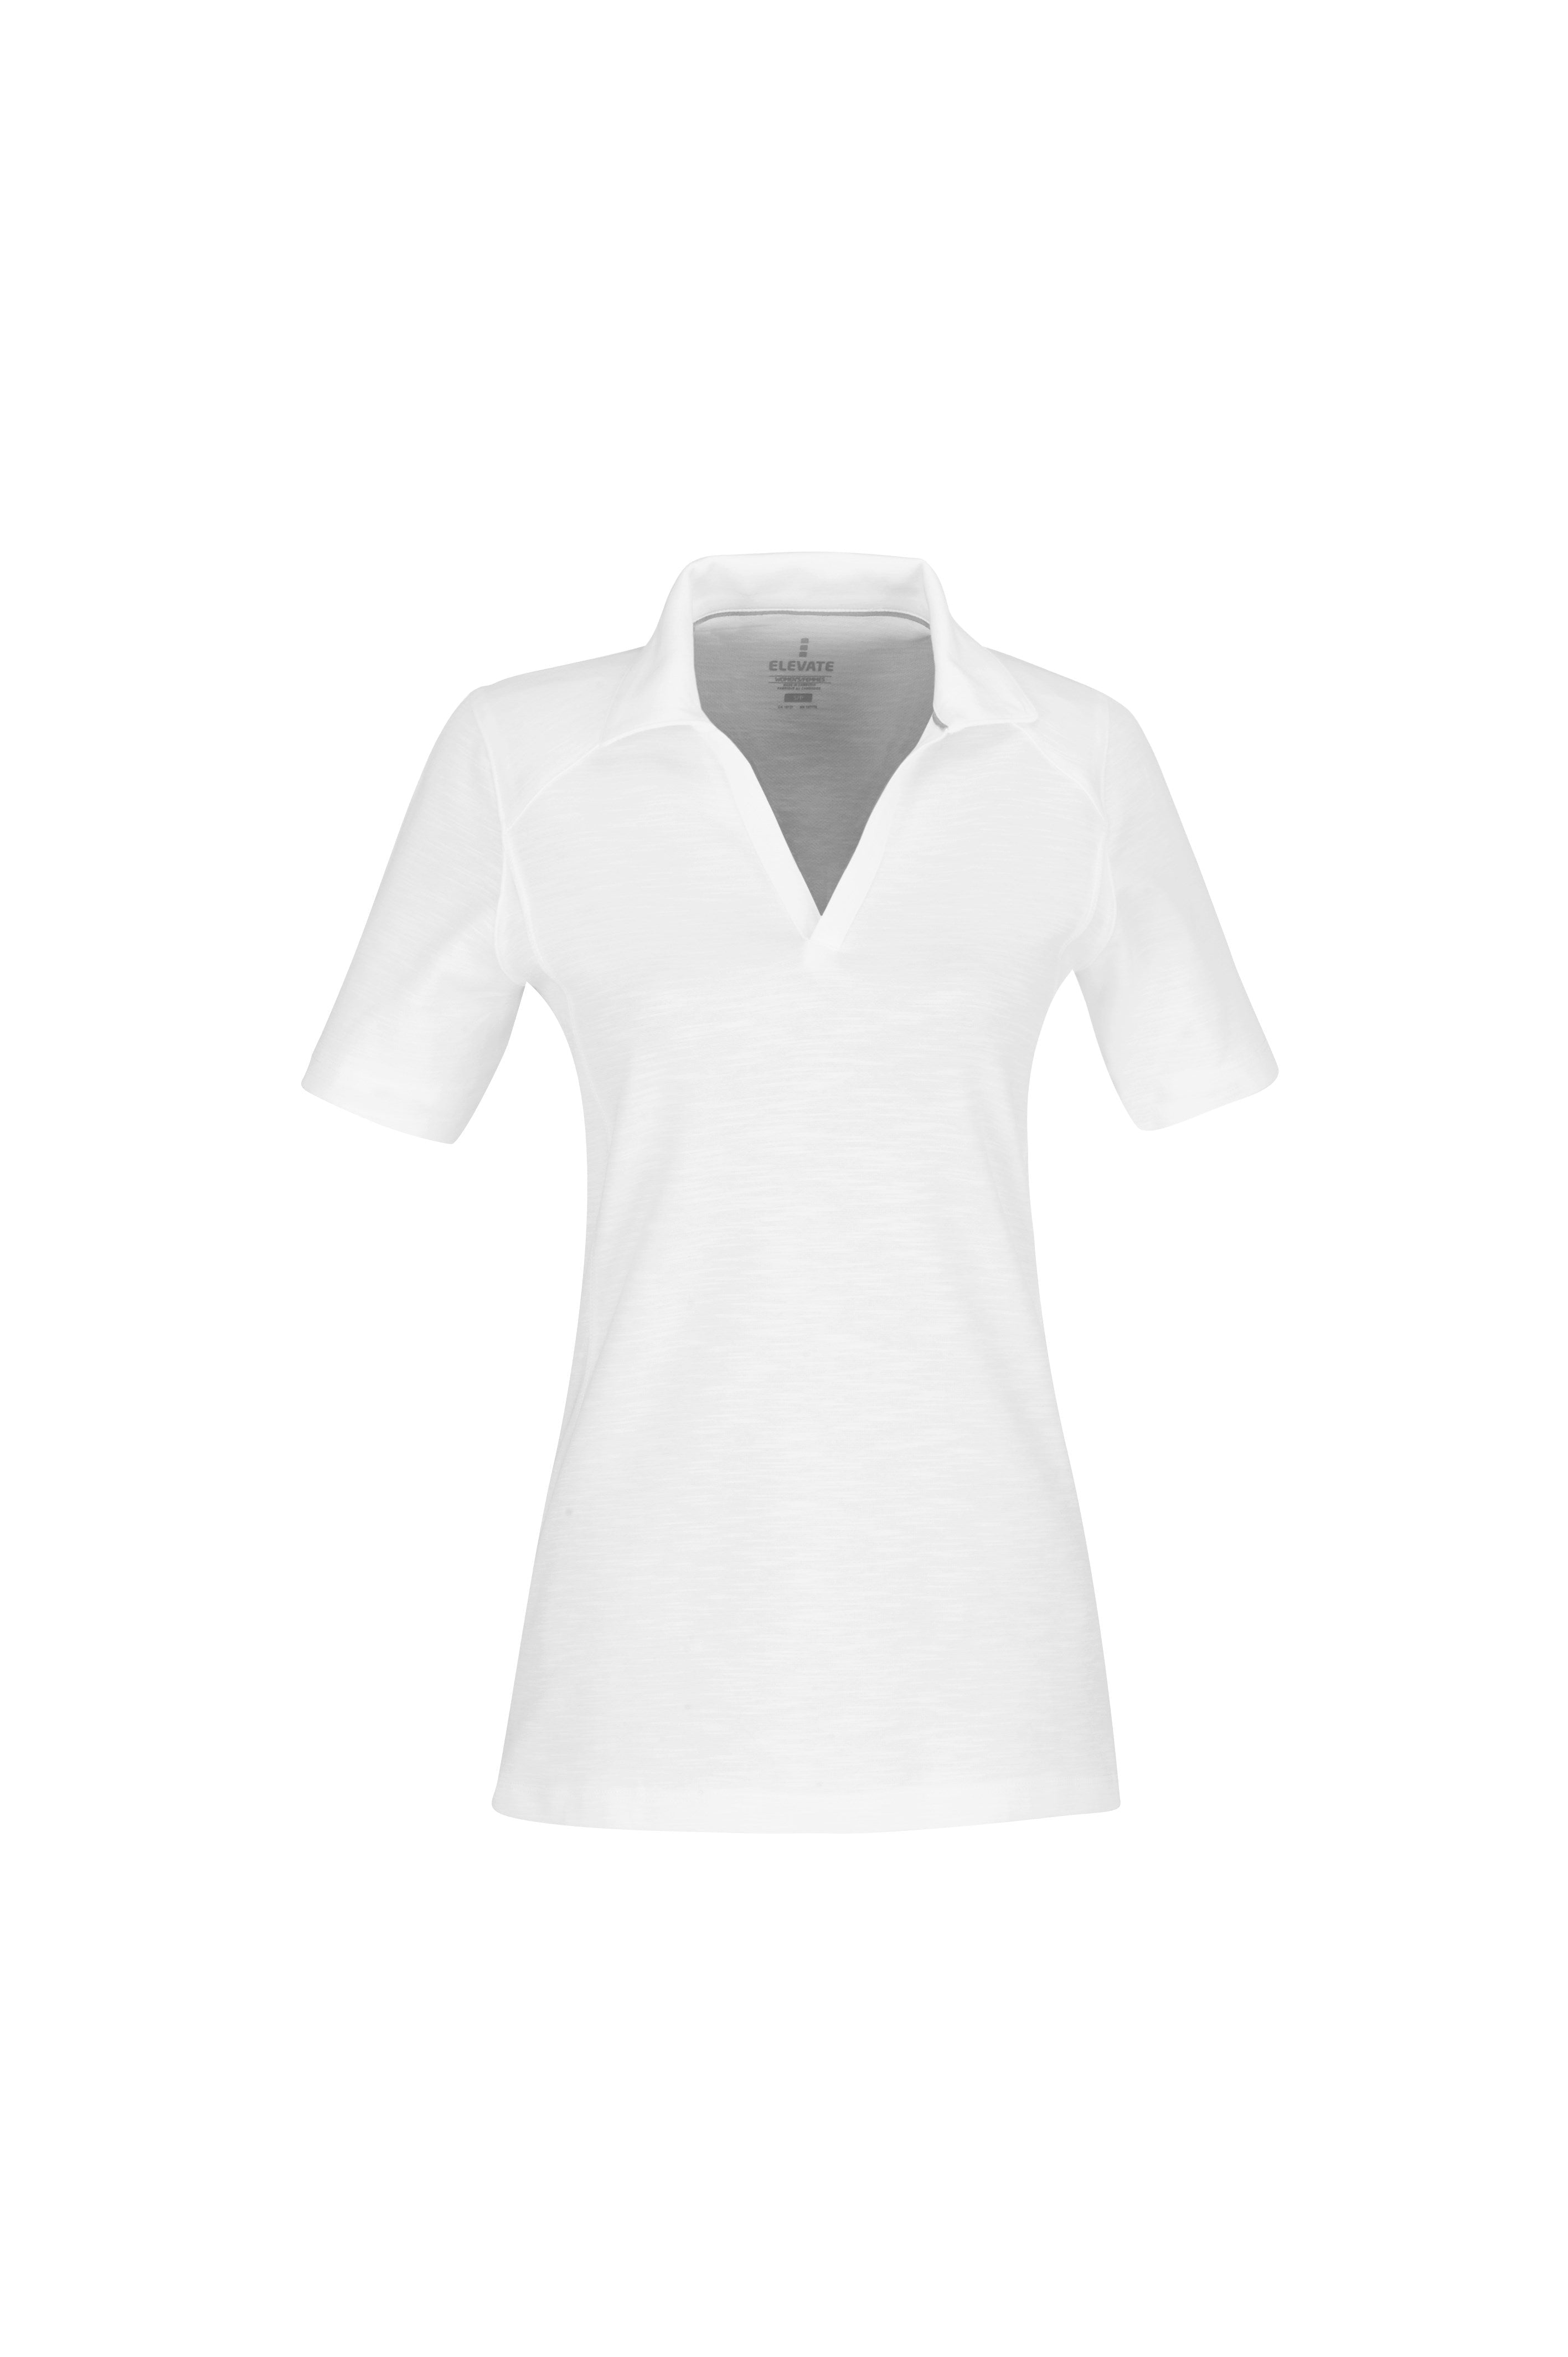 Ladies Jepson Golf Shirt - White Only-L-White-W